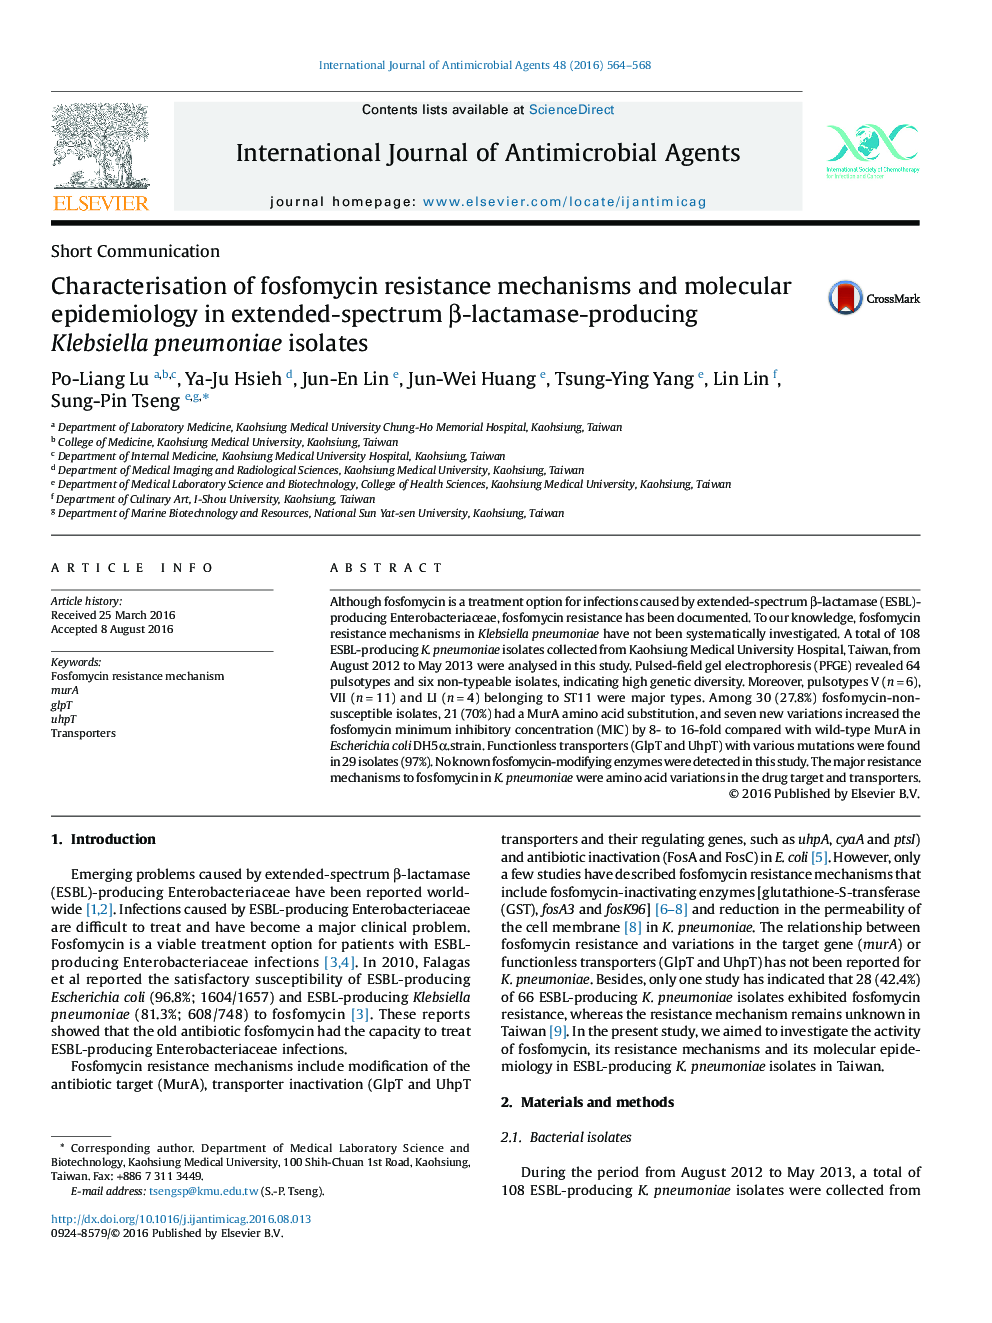 Characterisation of fosfomycin resistance mechanisms and molecular epidemiology in extended-spectrum Î²-lactamase-producing Klebsiella pneumoniae isolates